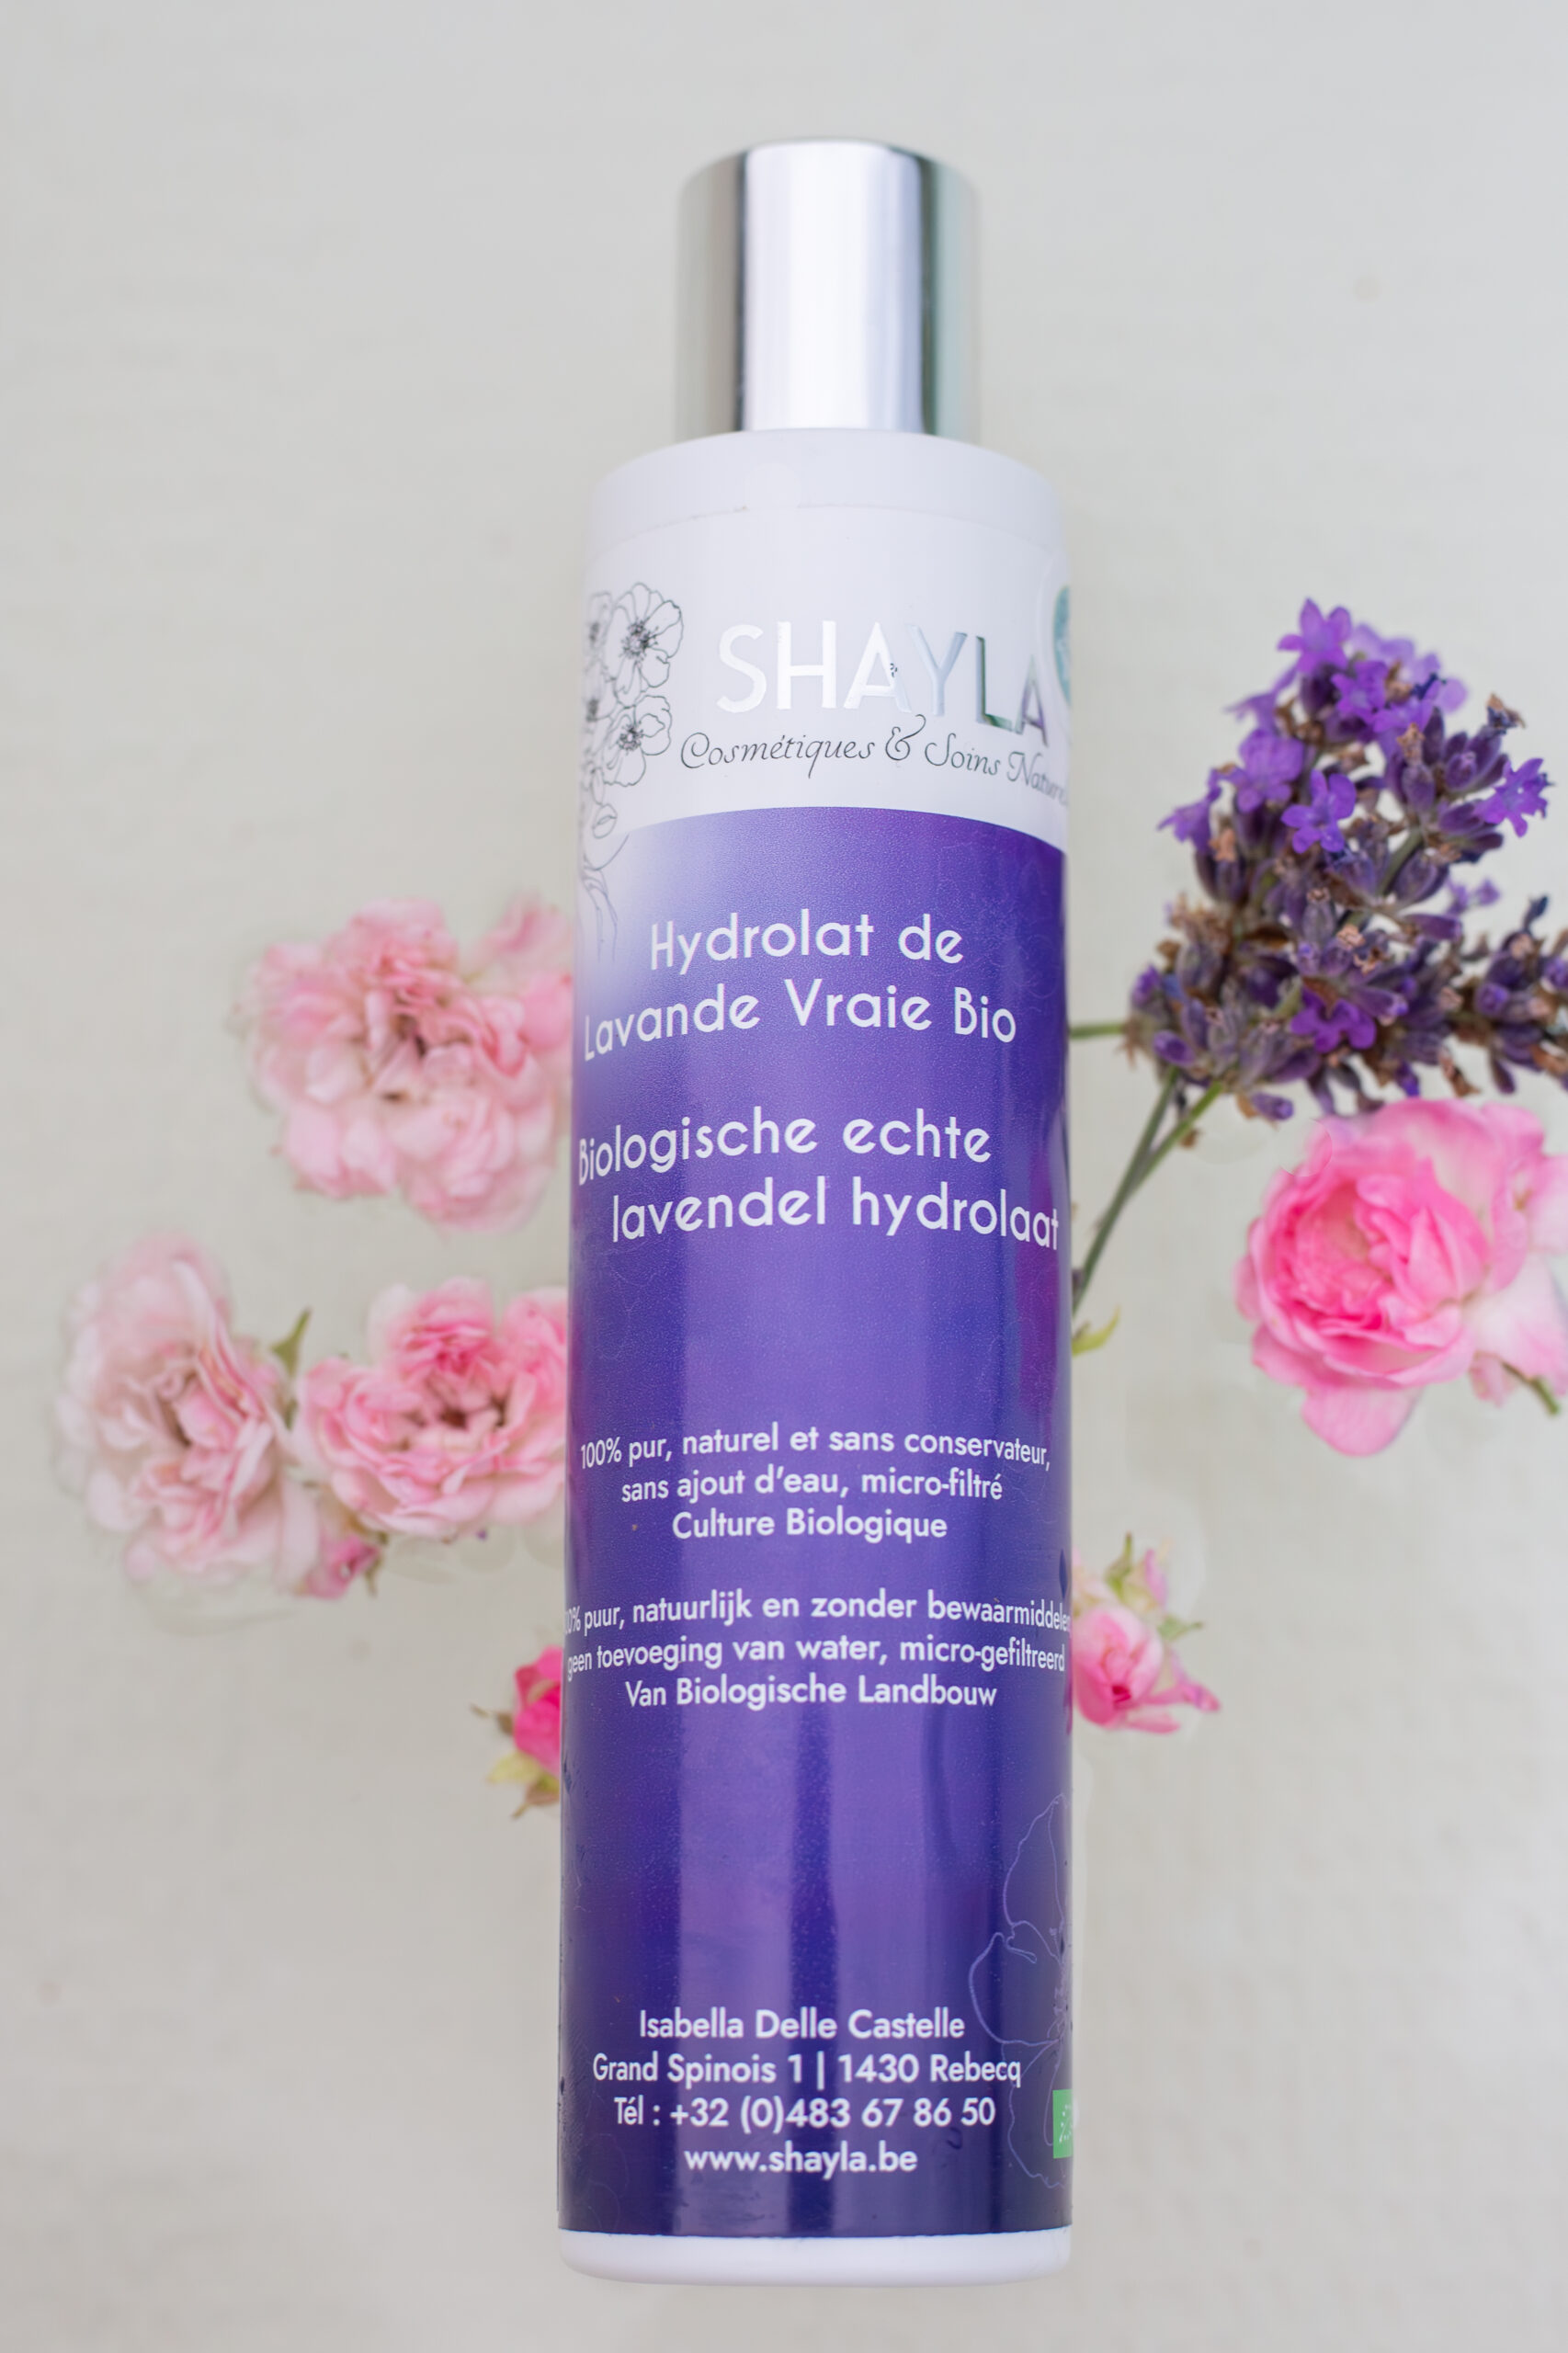 cosmetiques naturels - routine visage - hydrolat lavande vraie bio - soins naturels Shayla - made in belgium - fabriqué en belgique-Fondatrice - Isabella Delle CASTELLE _ LABO SHAYLA.